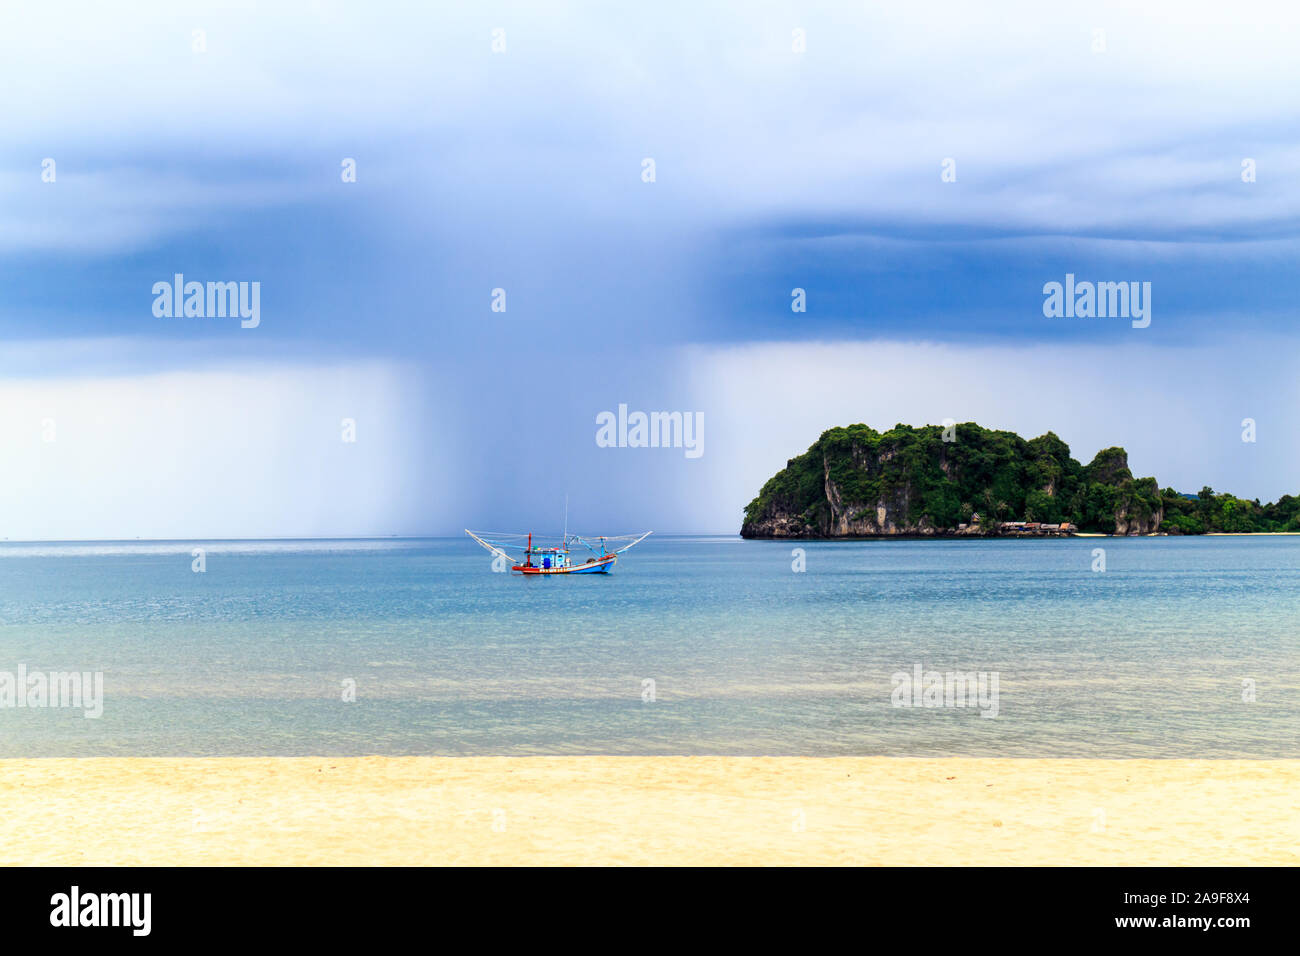 Regensturm über Fischerboot, Sai Ri Strand, Chumphon, Thailand Stockfoto